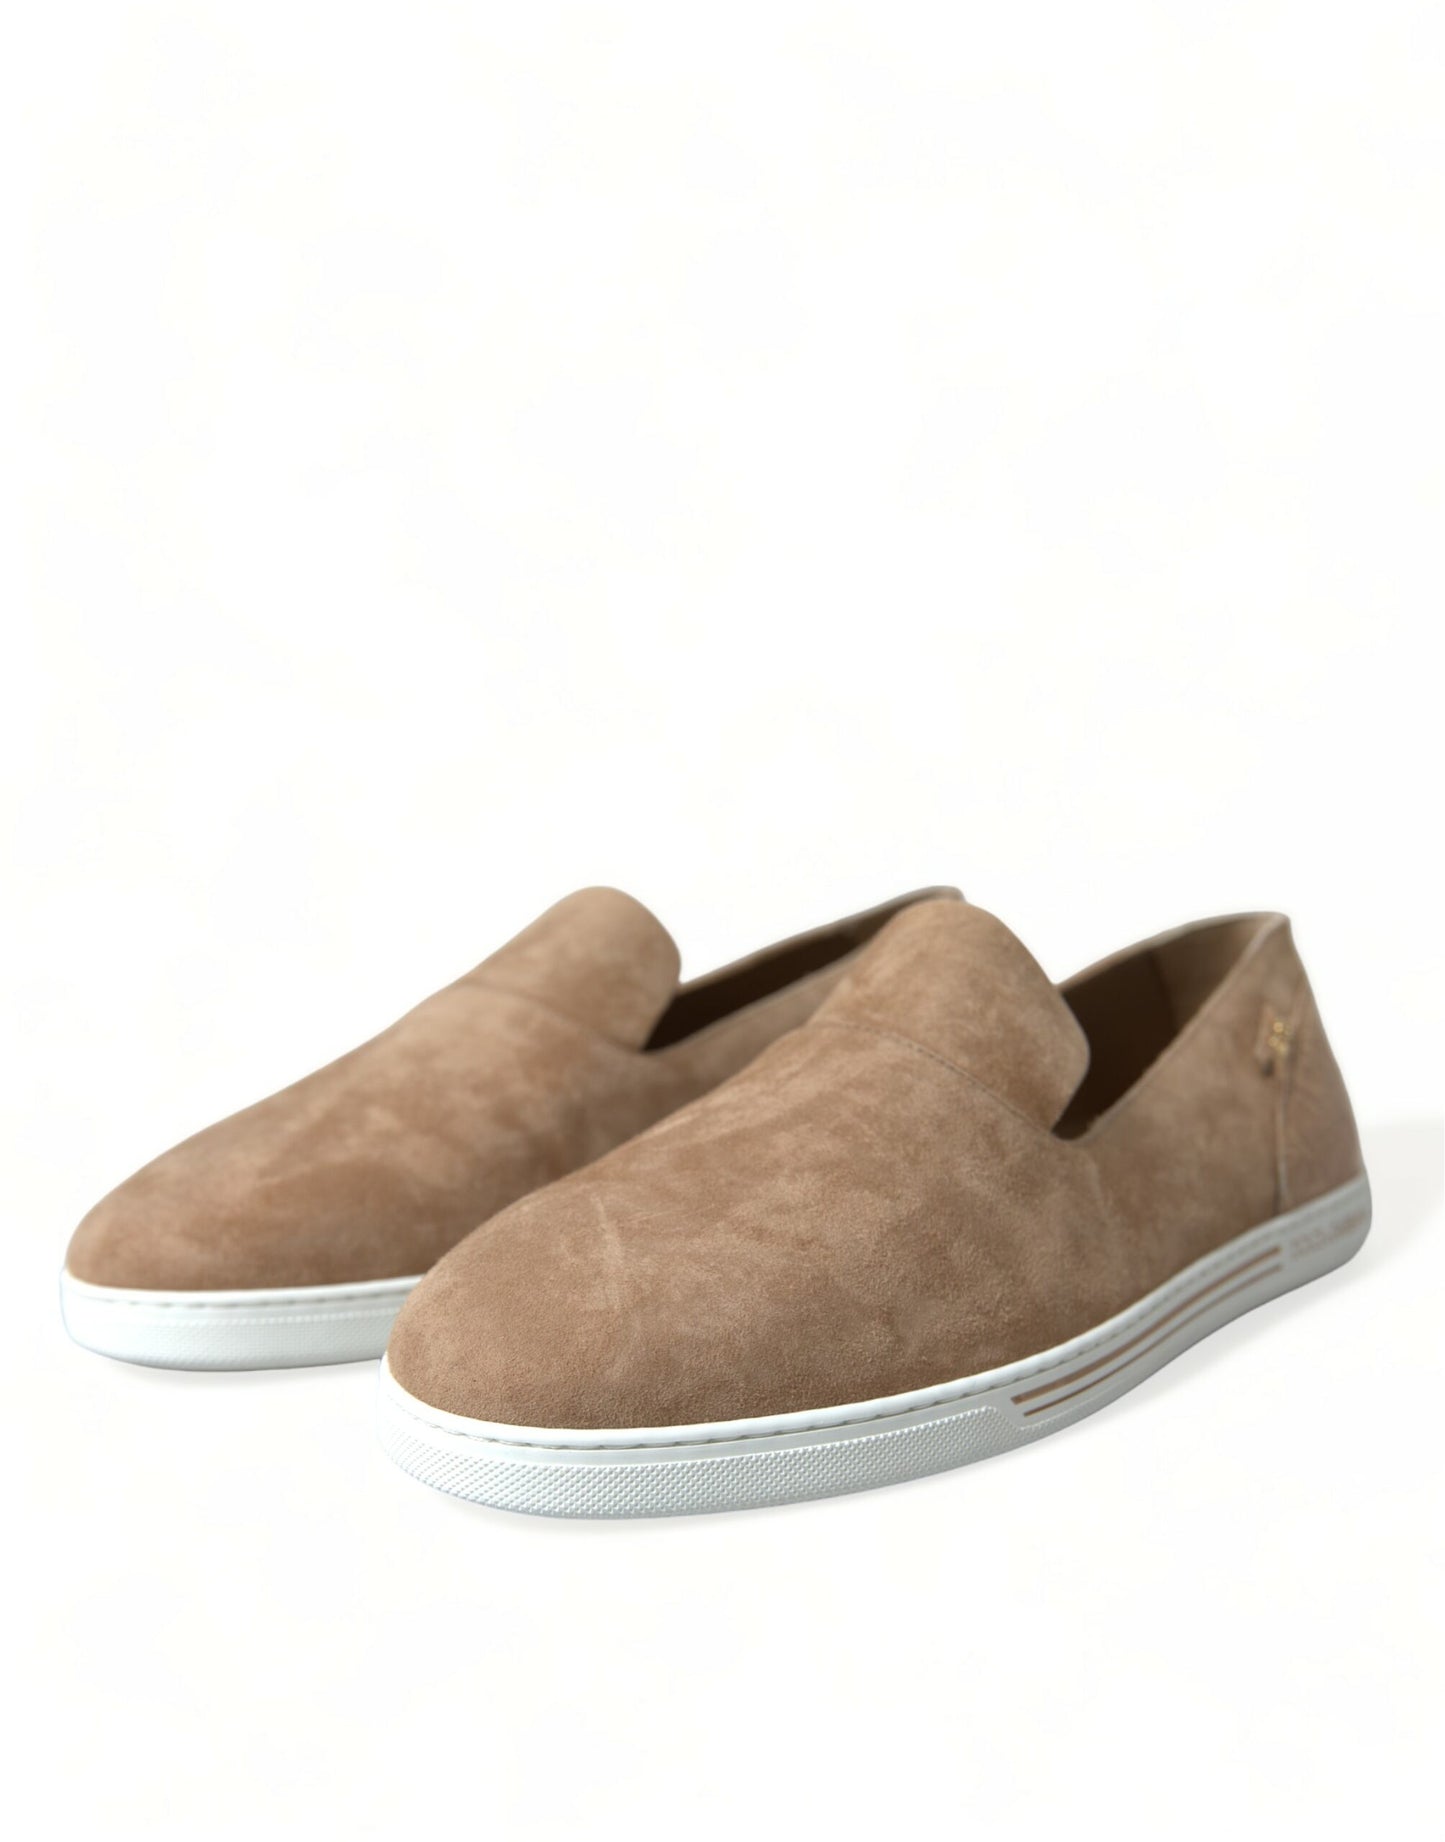 Elegant Beige Leather Loafers